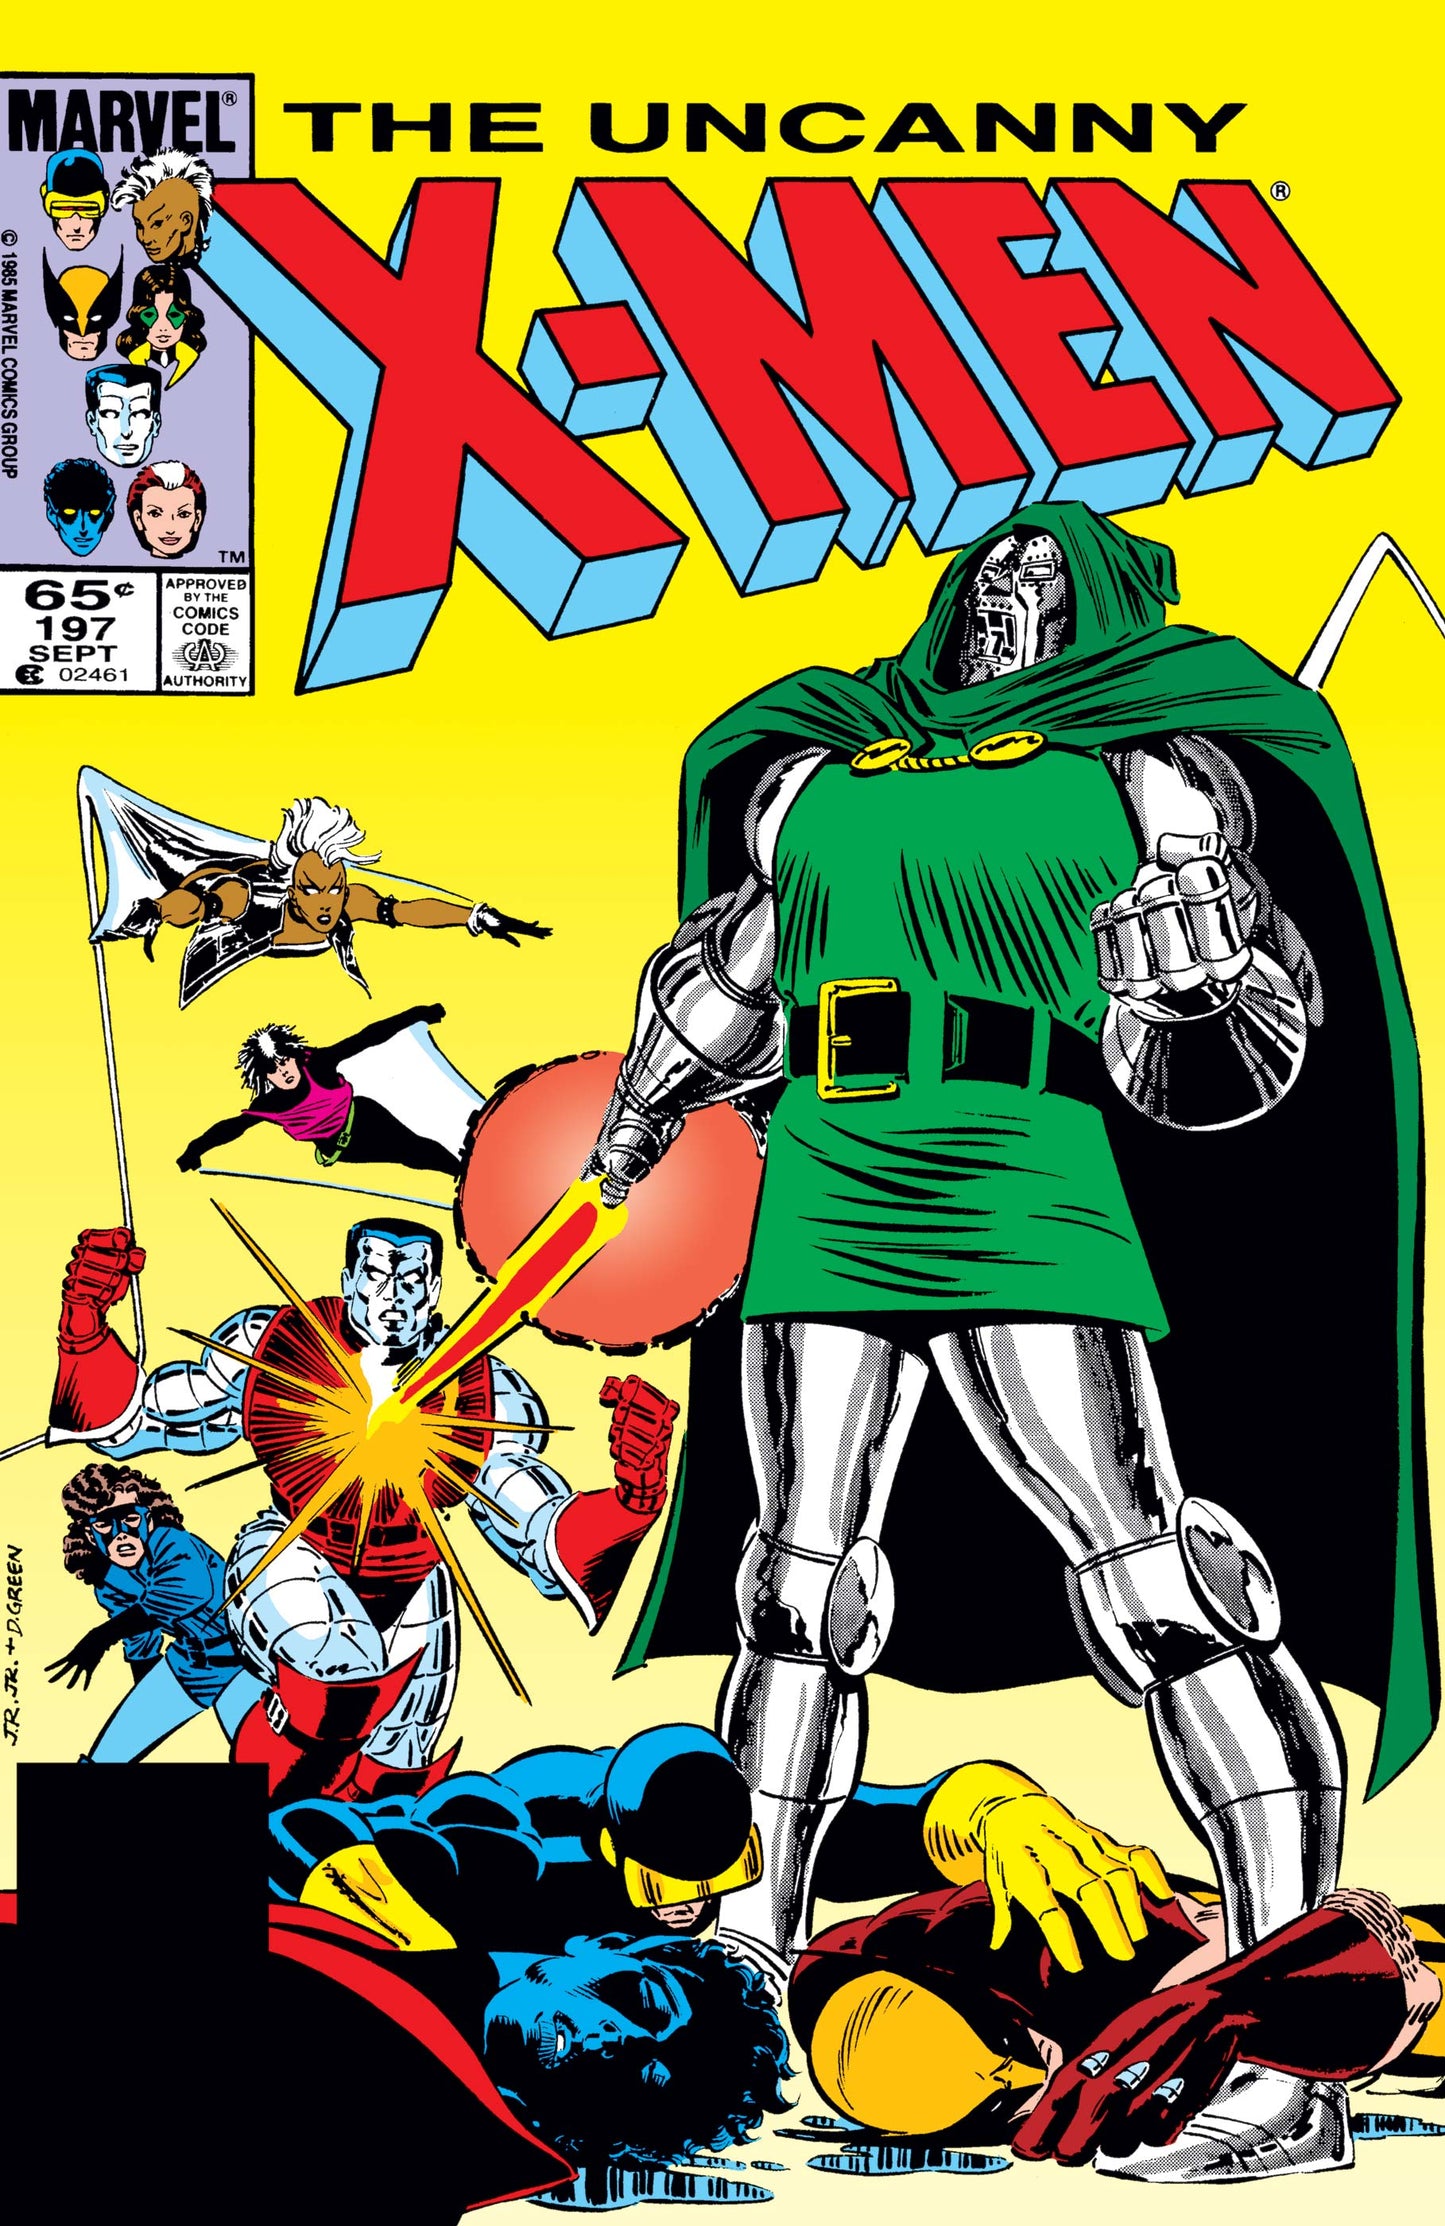 Uncanny X-Men #197 (VF)